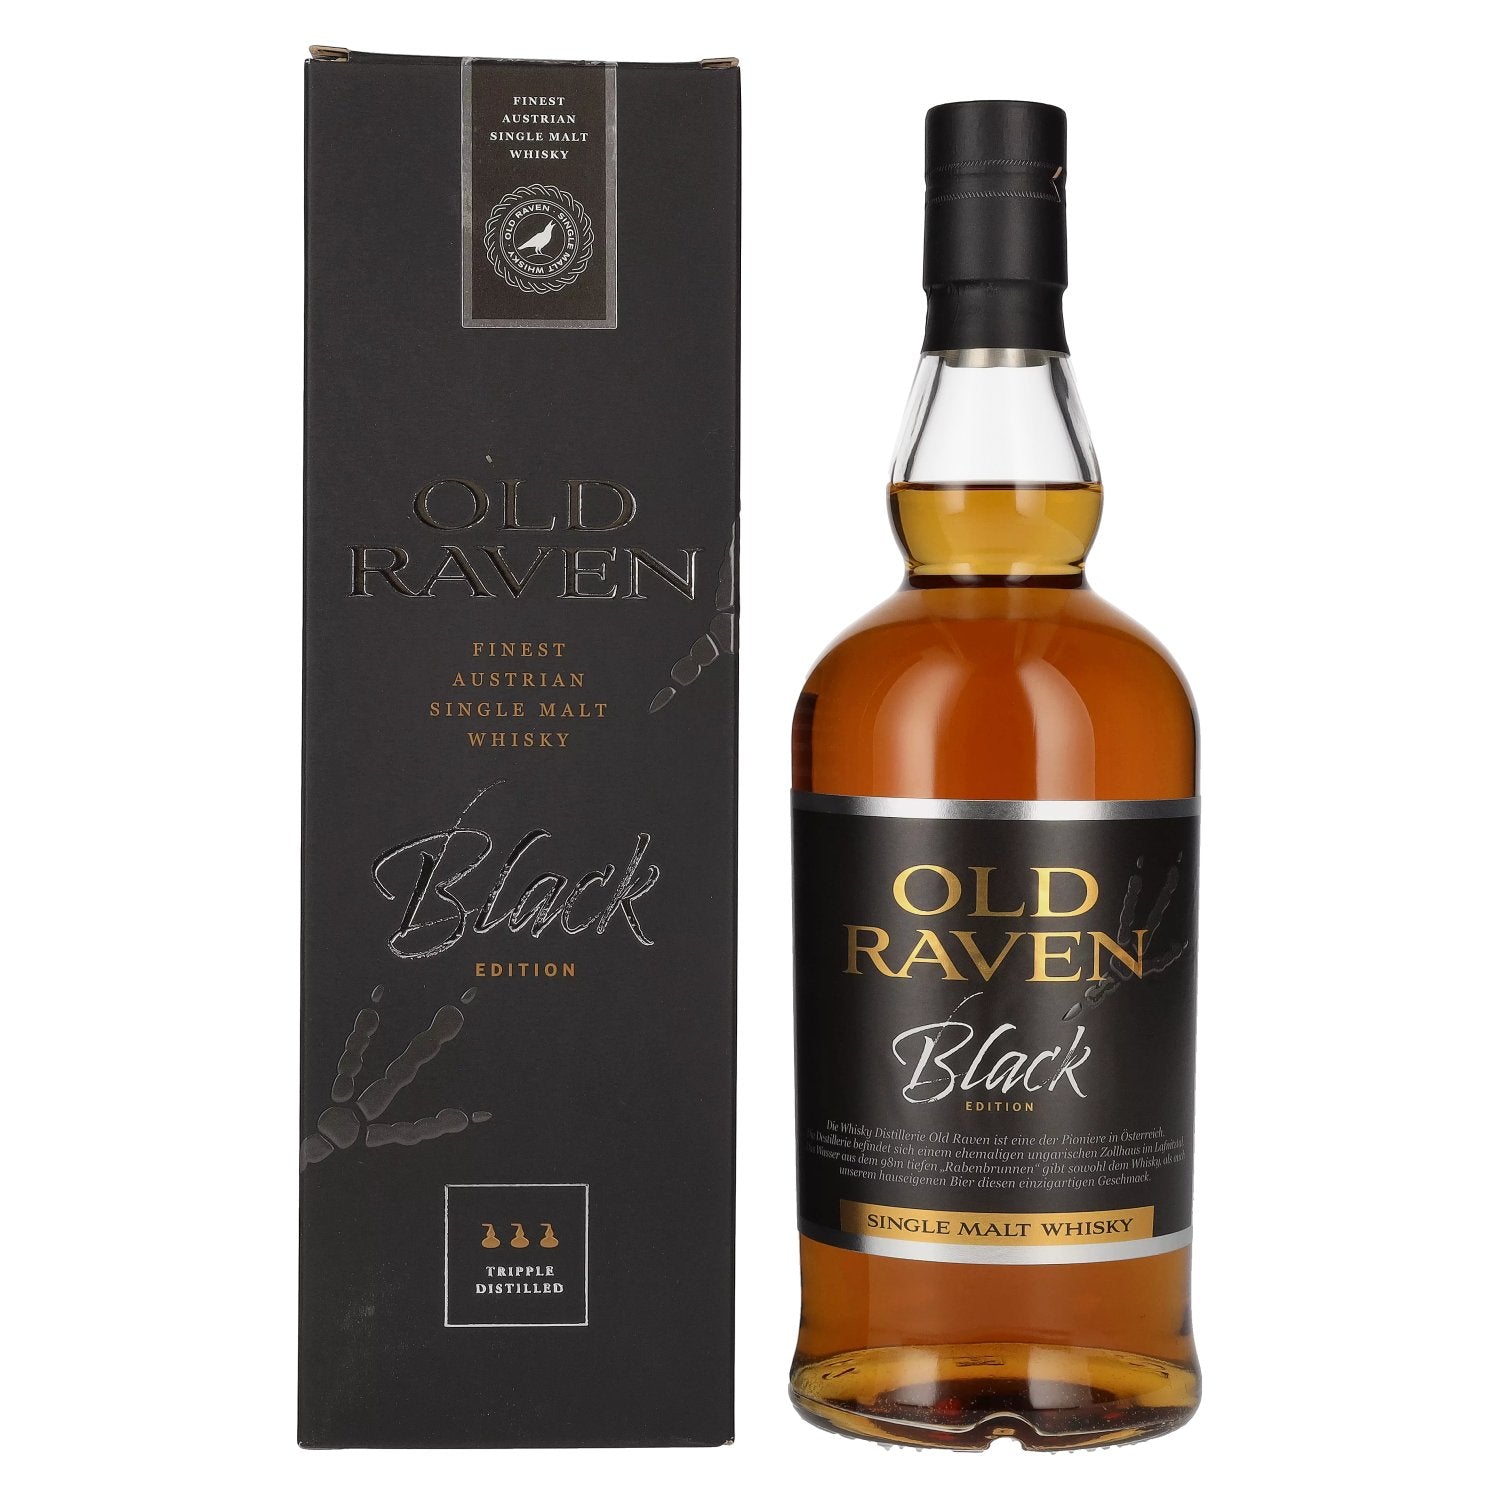 Old Raven Triple Distilled Single Malt Whisky Black Edition Fasstaerke 54% Vol. 0,7l in Giftbox